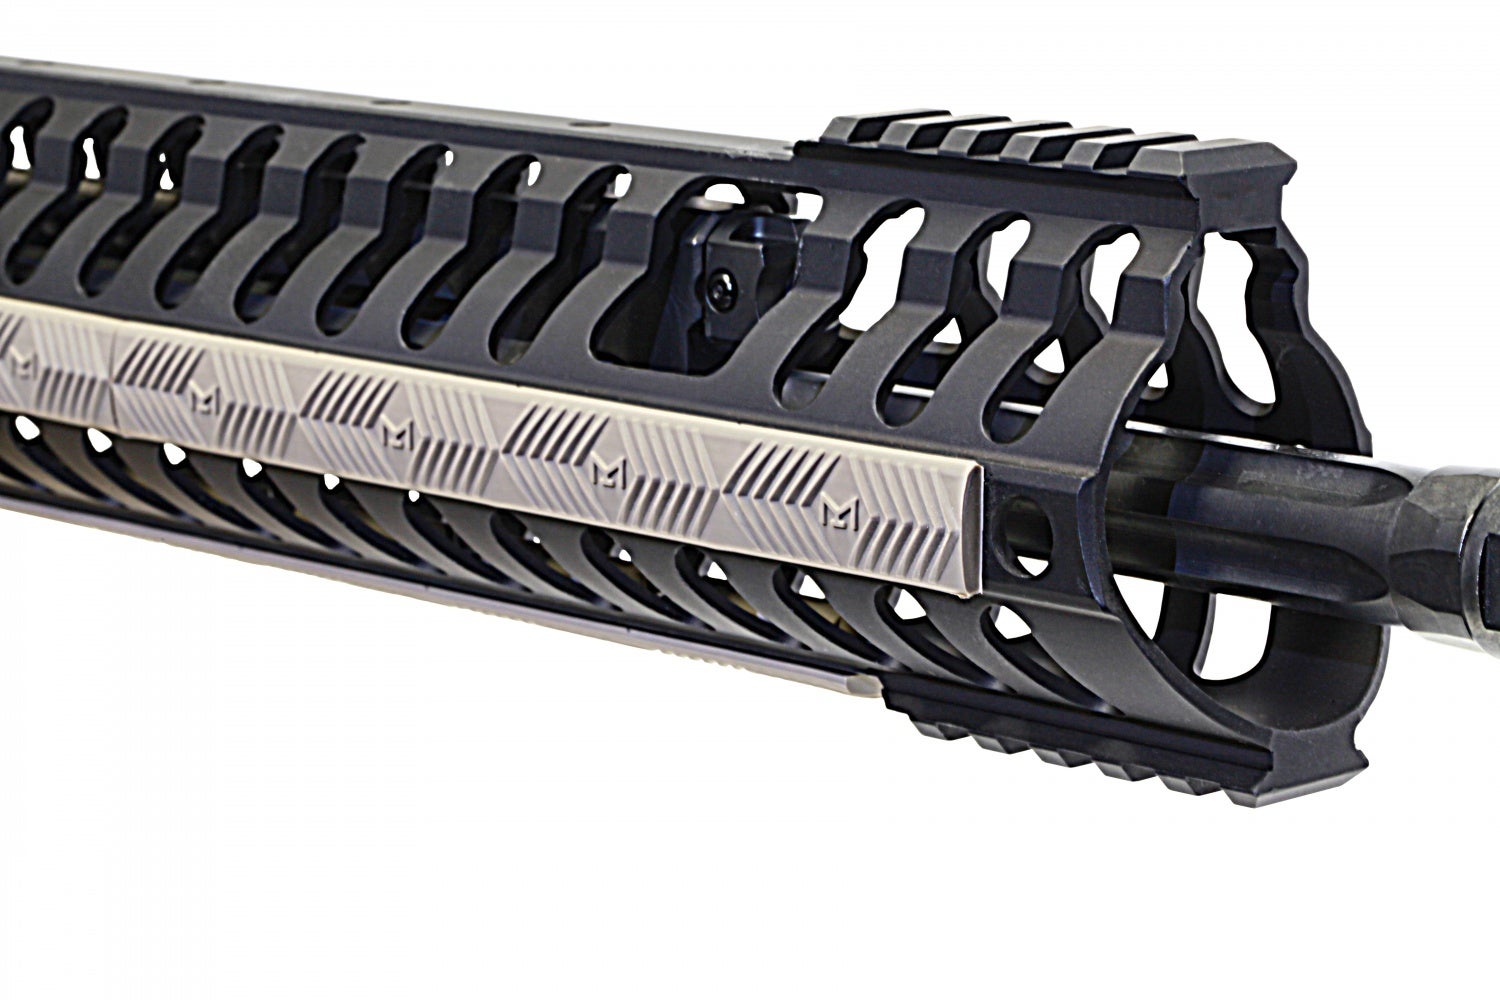 New ERGO Grip Rail Slot Covers. In M-LOK! -The Firearm Blog